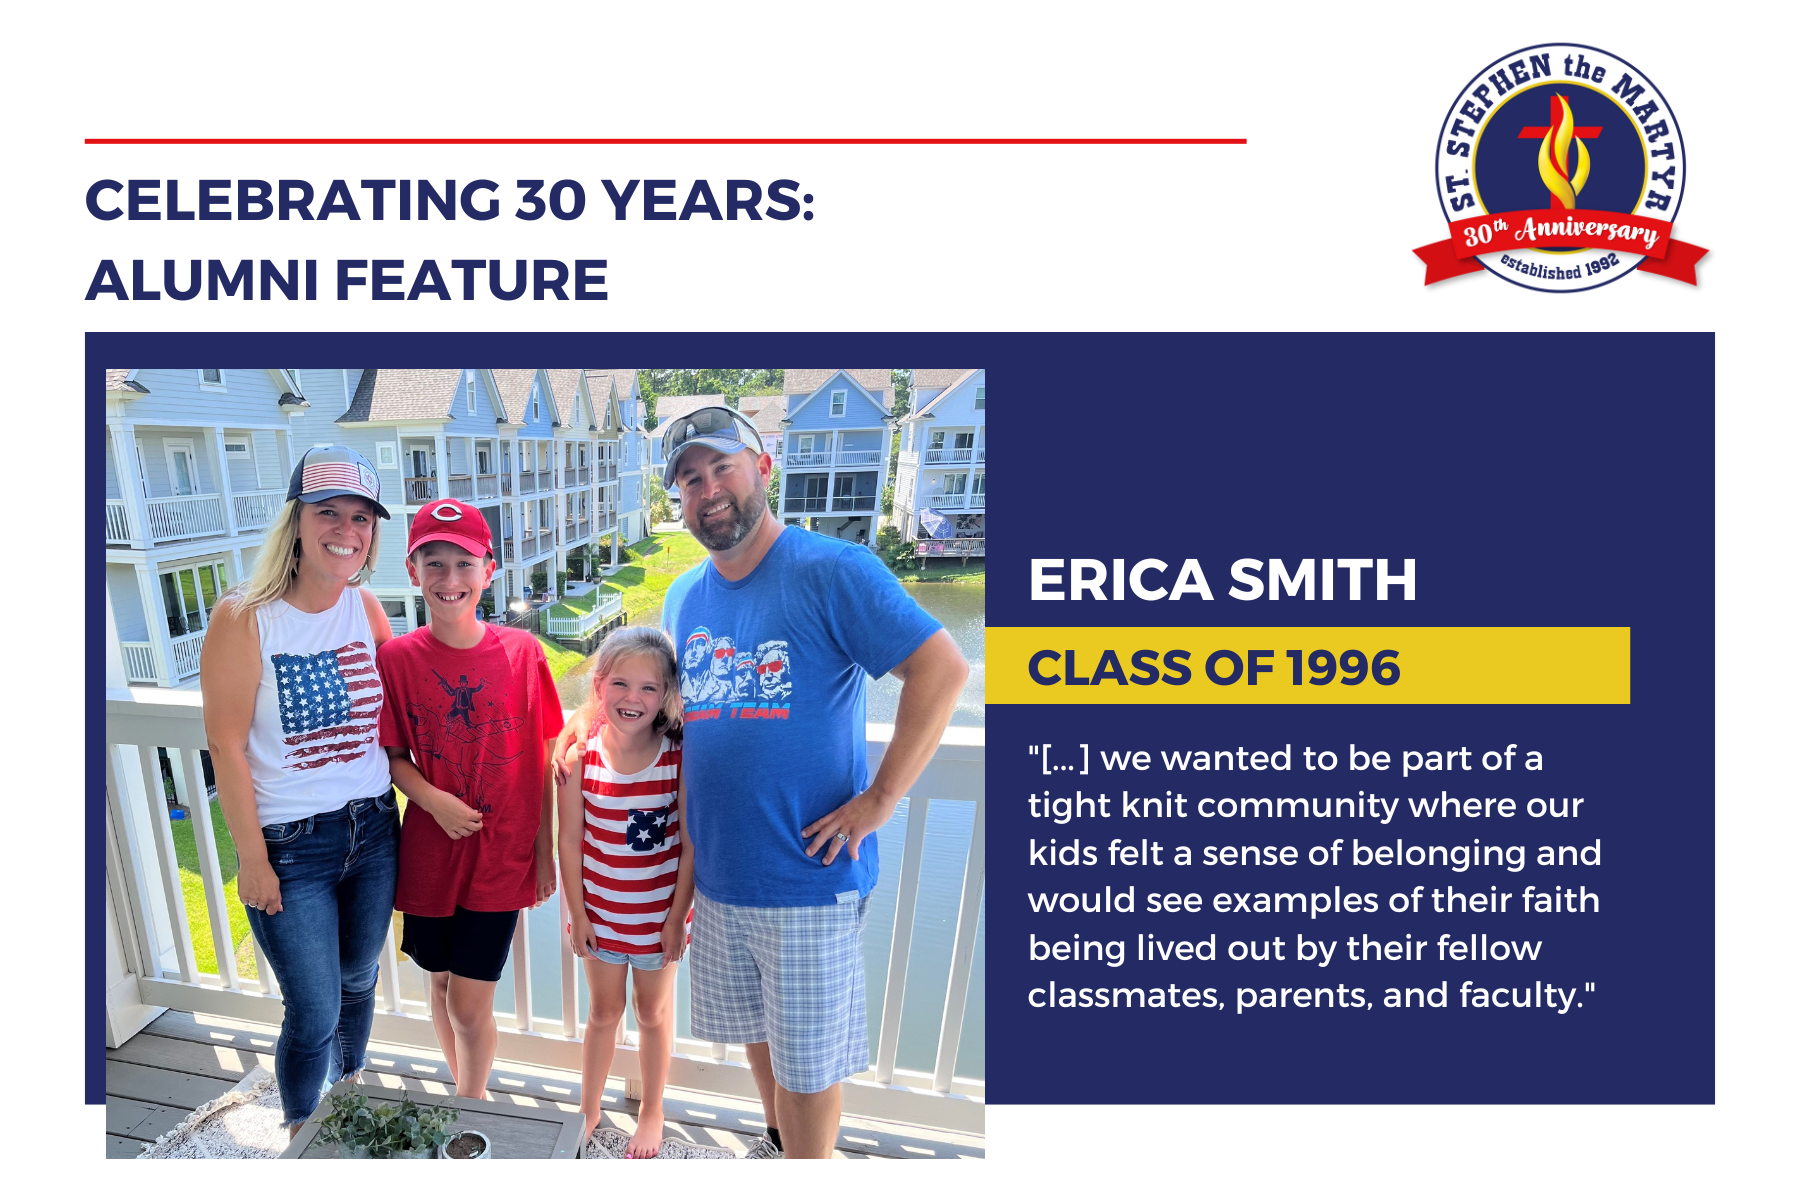 Alumni Feature: Erica Smith, Class of 1996